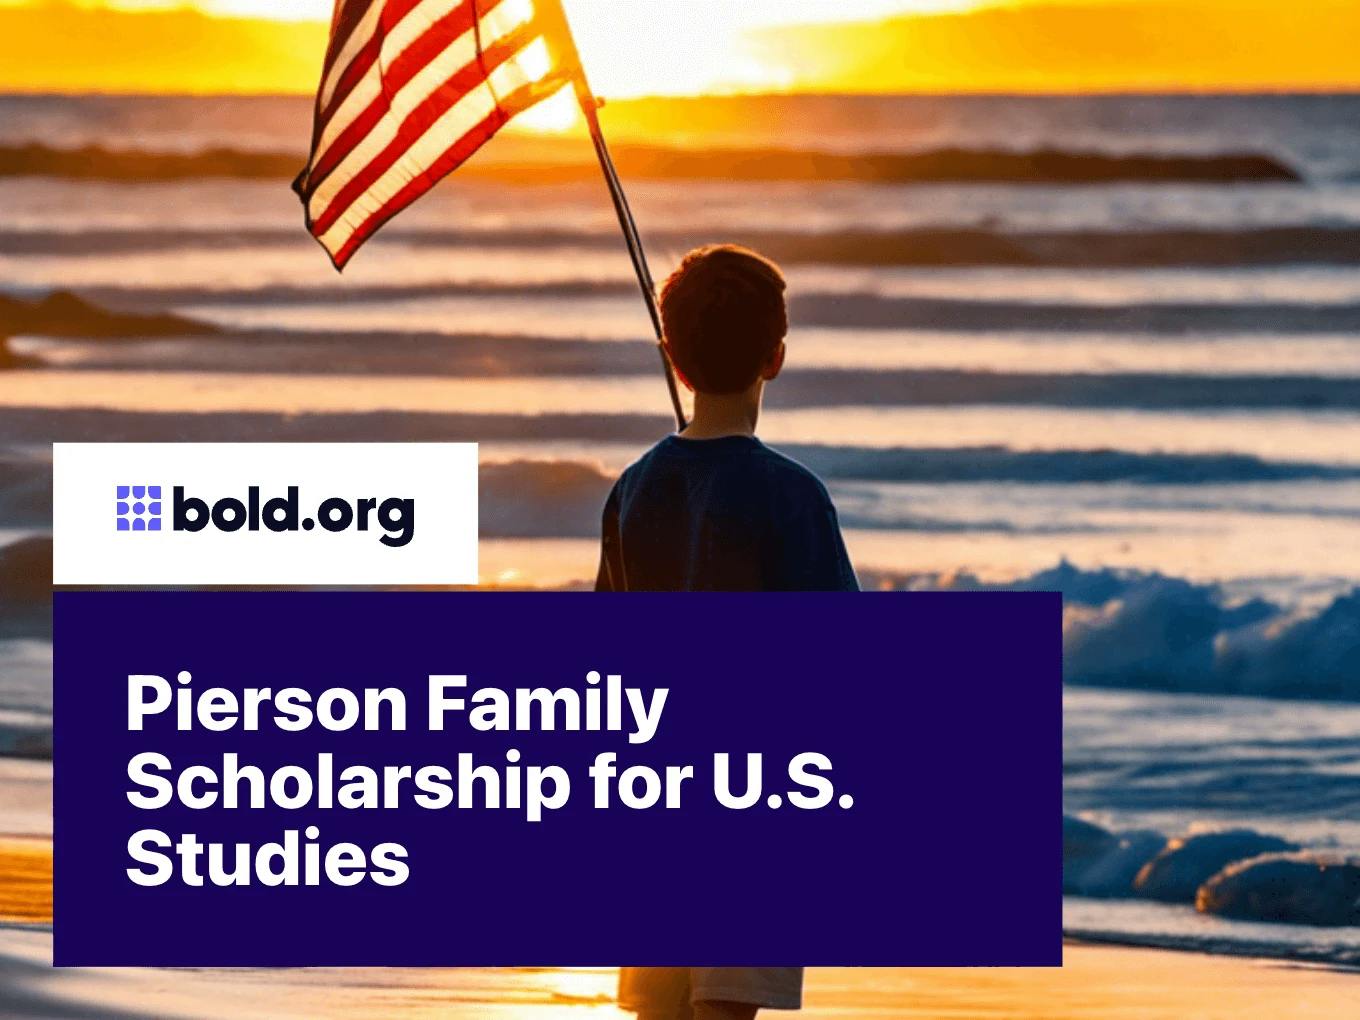 Pierson Family Scholarship for U.S. Studies